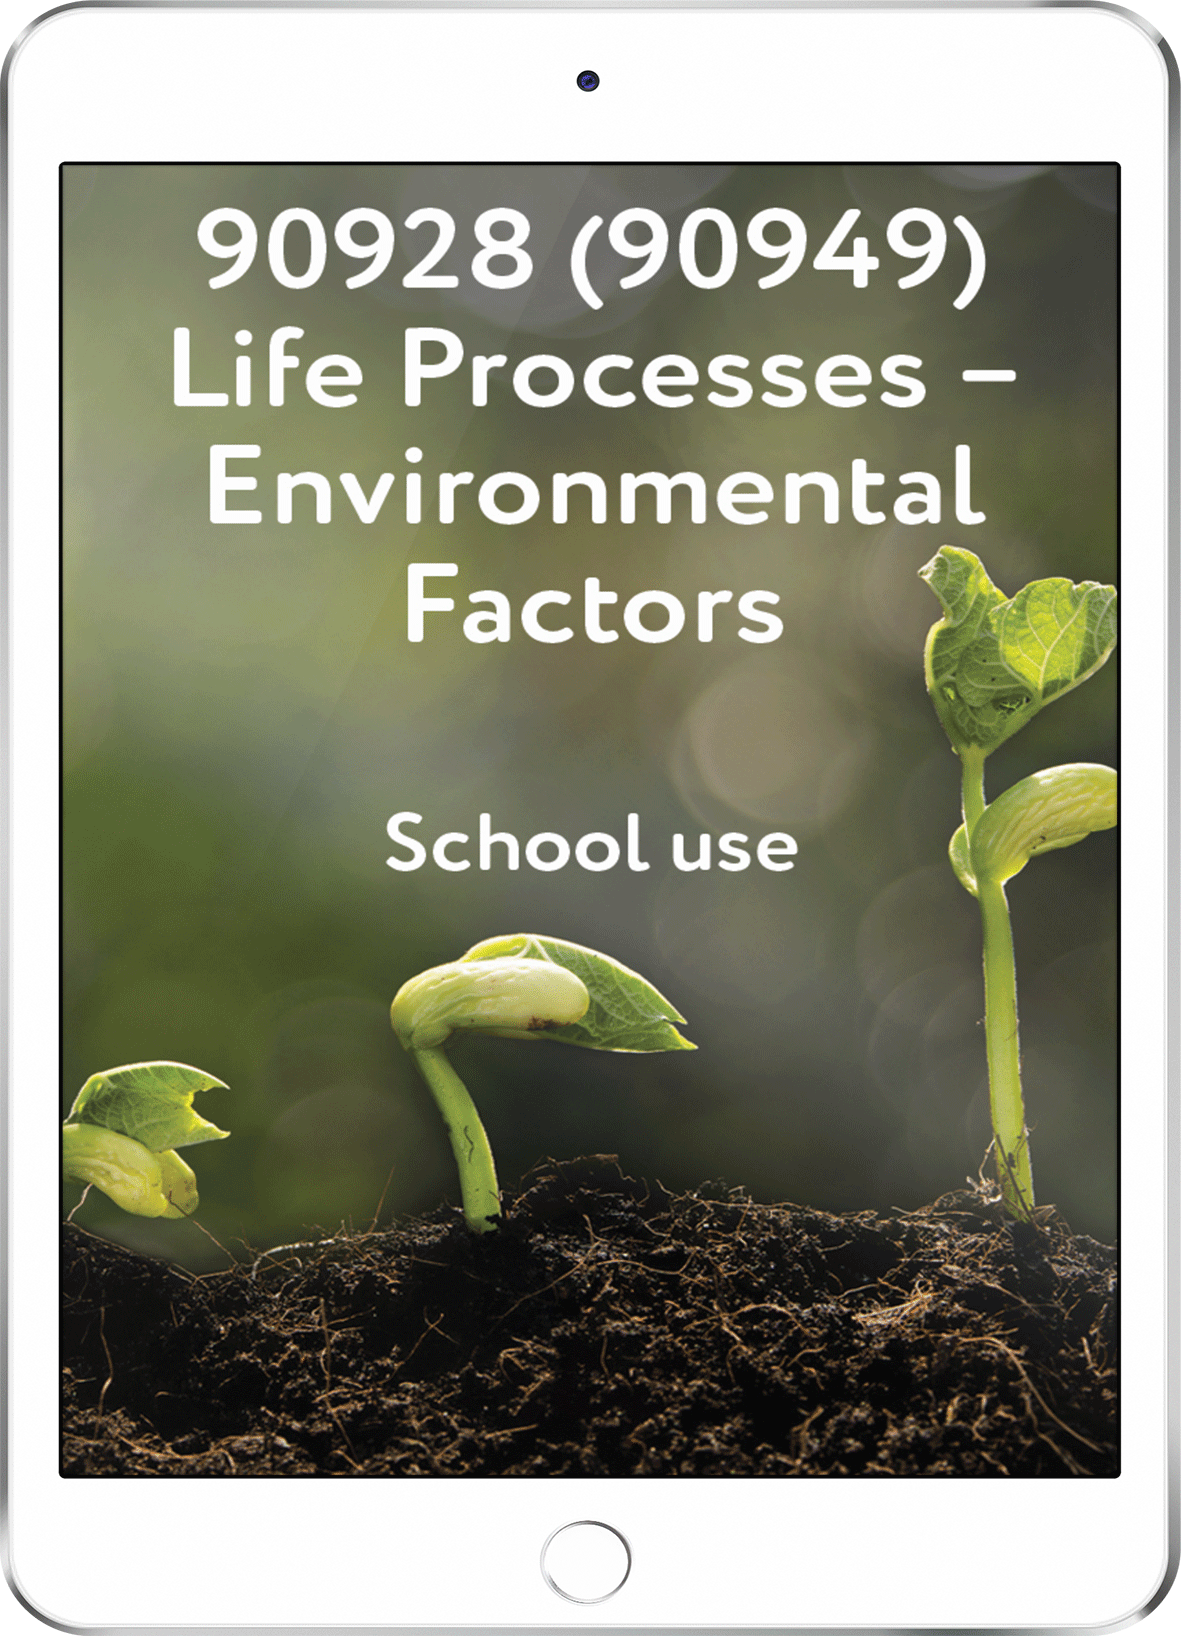 90928 (90949) Life Process-Environ Factors - School Use